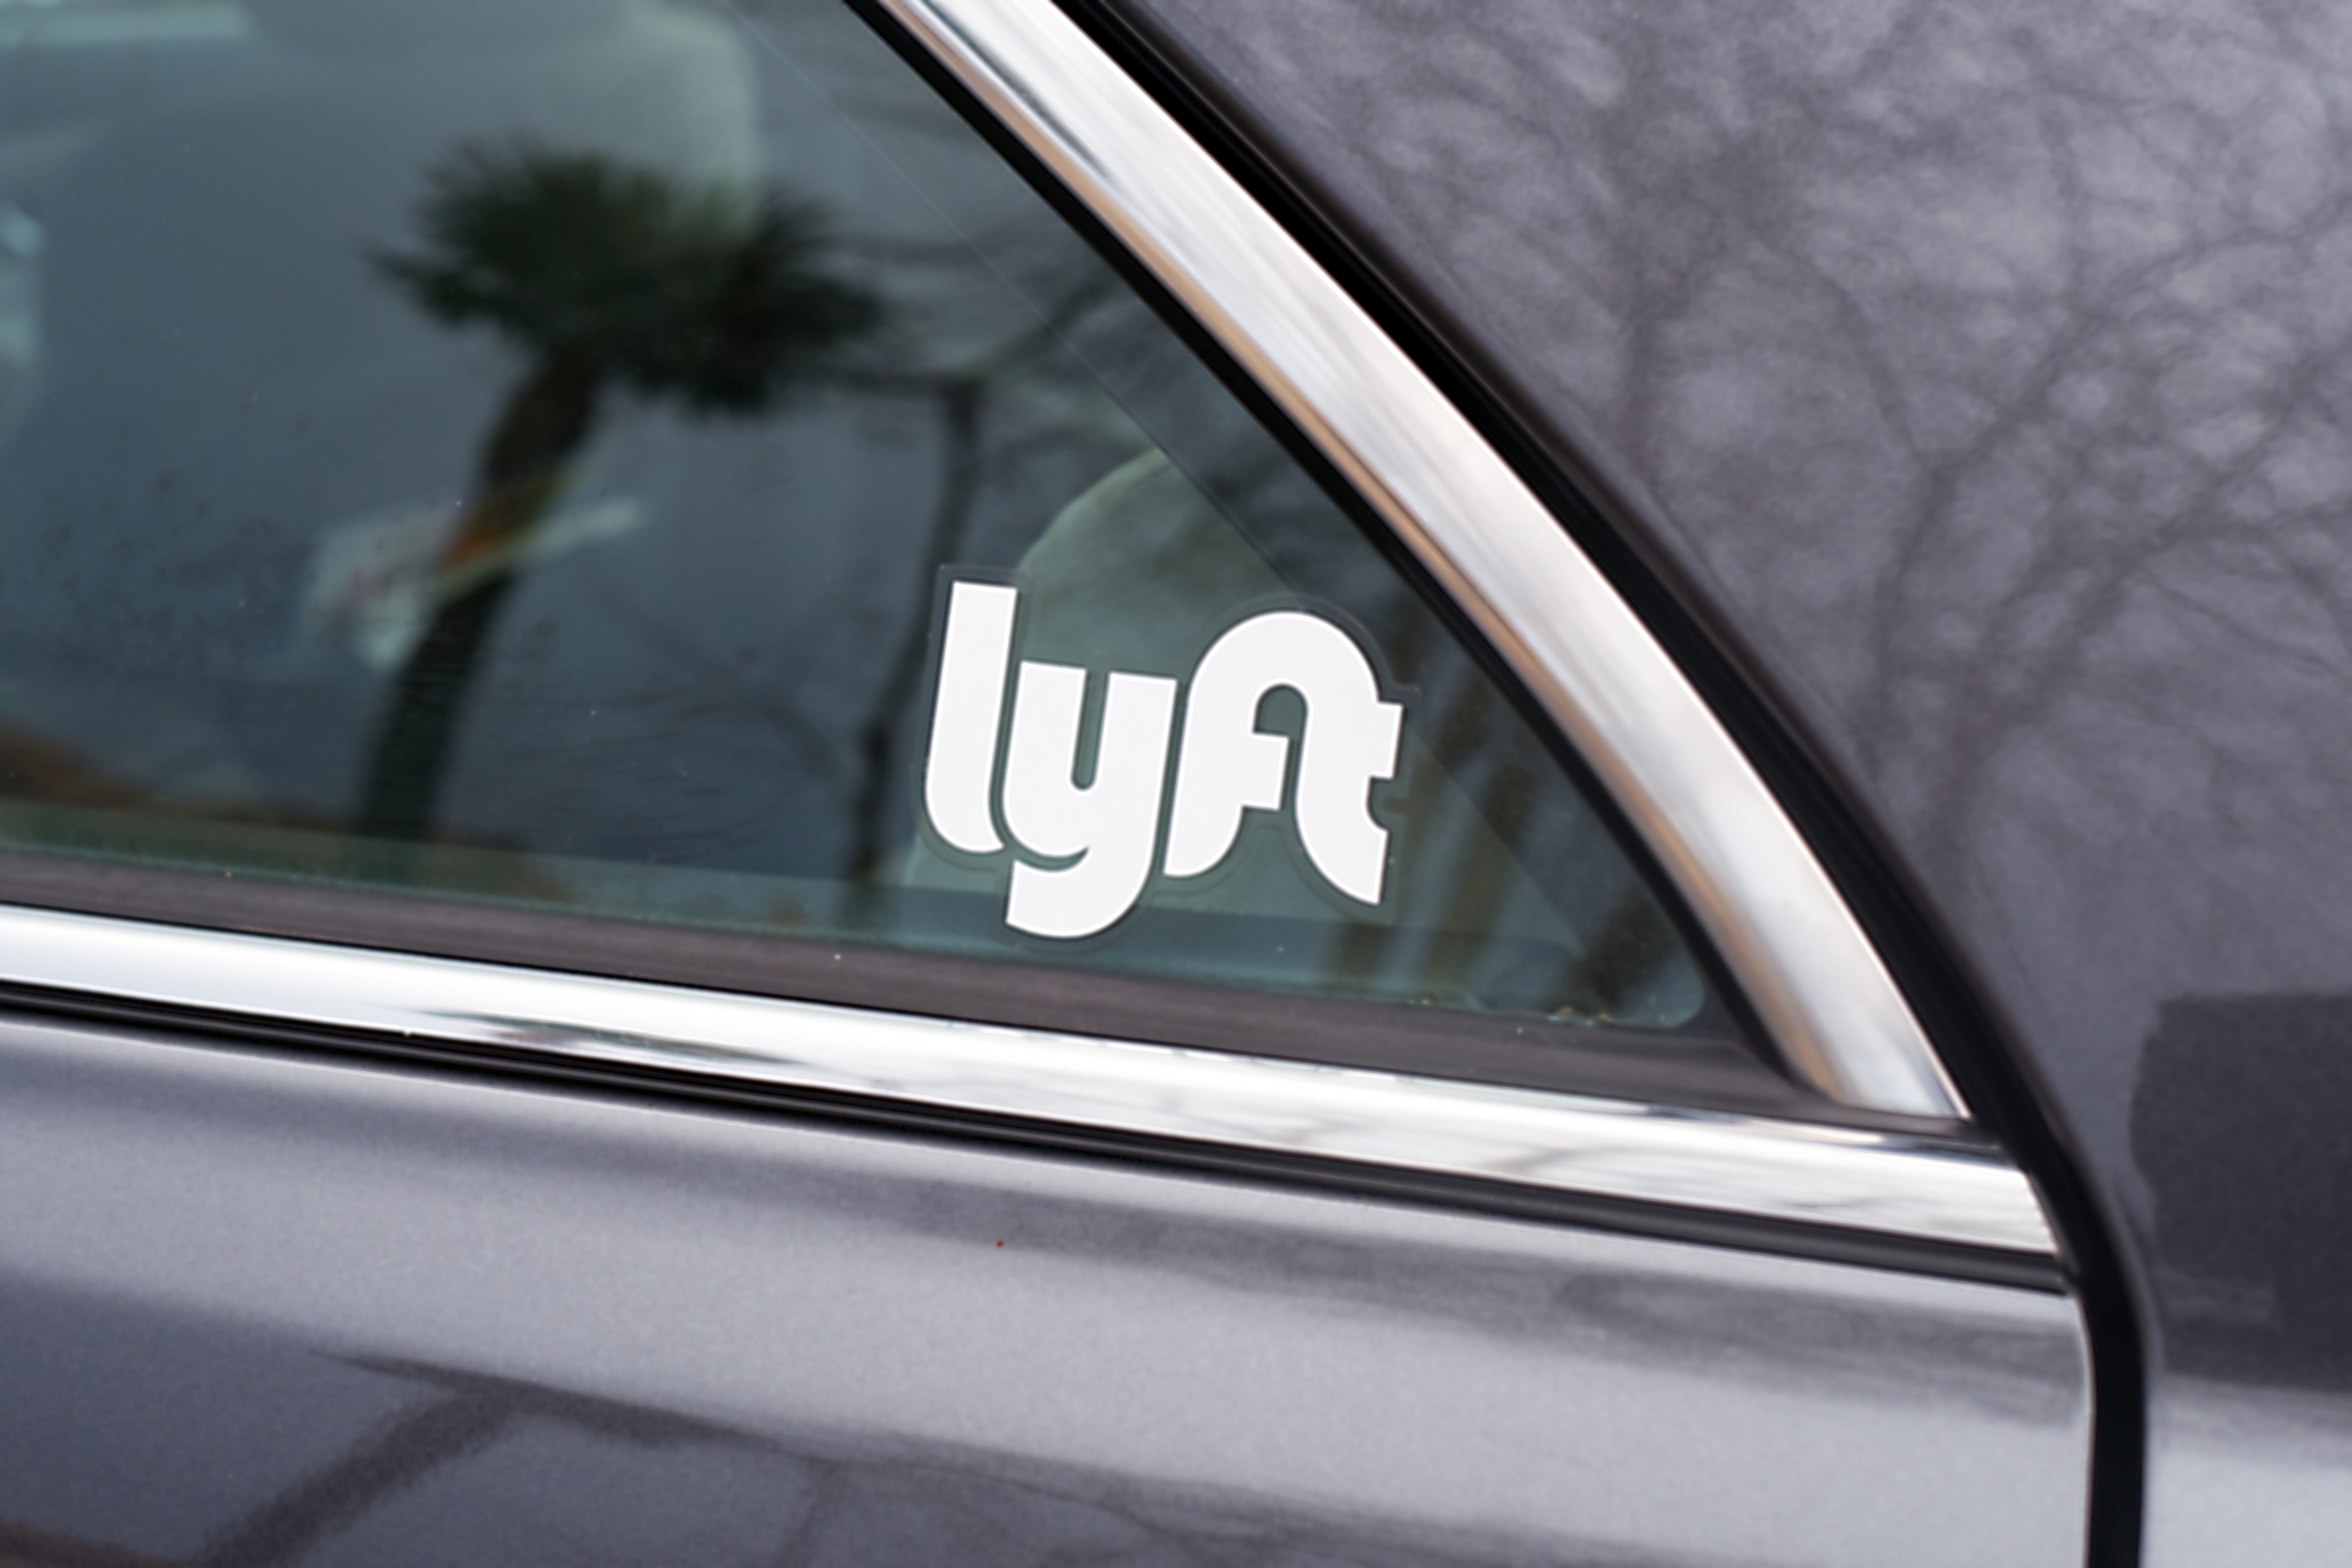 A Lyft sticker on a car window.